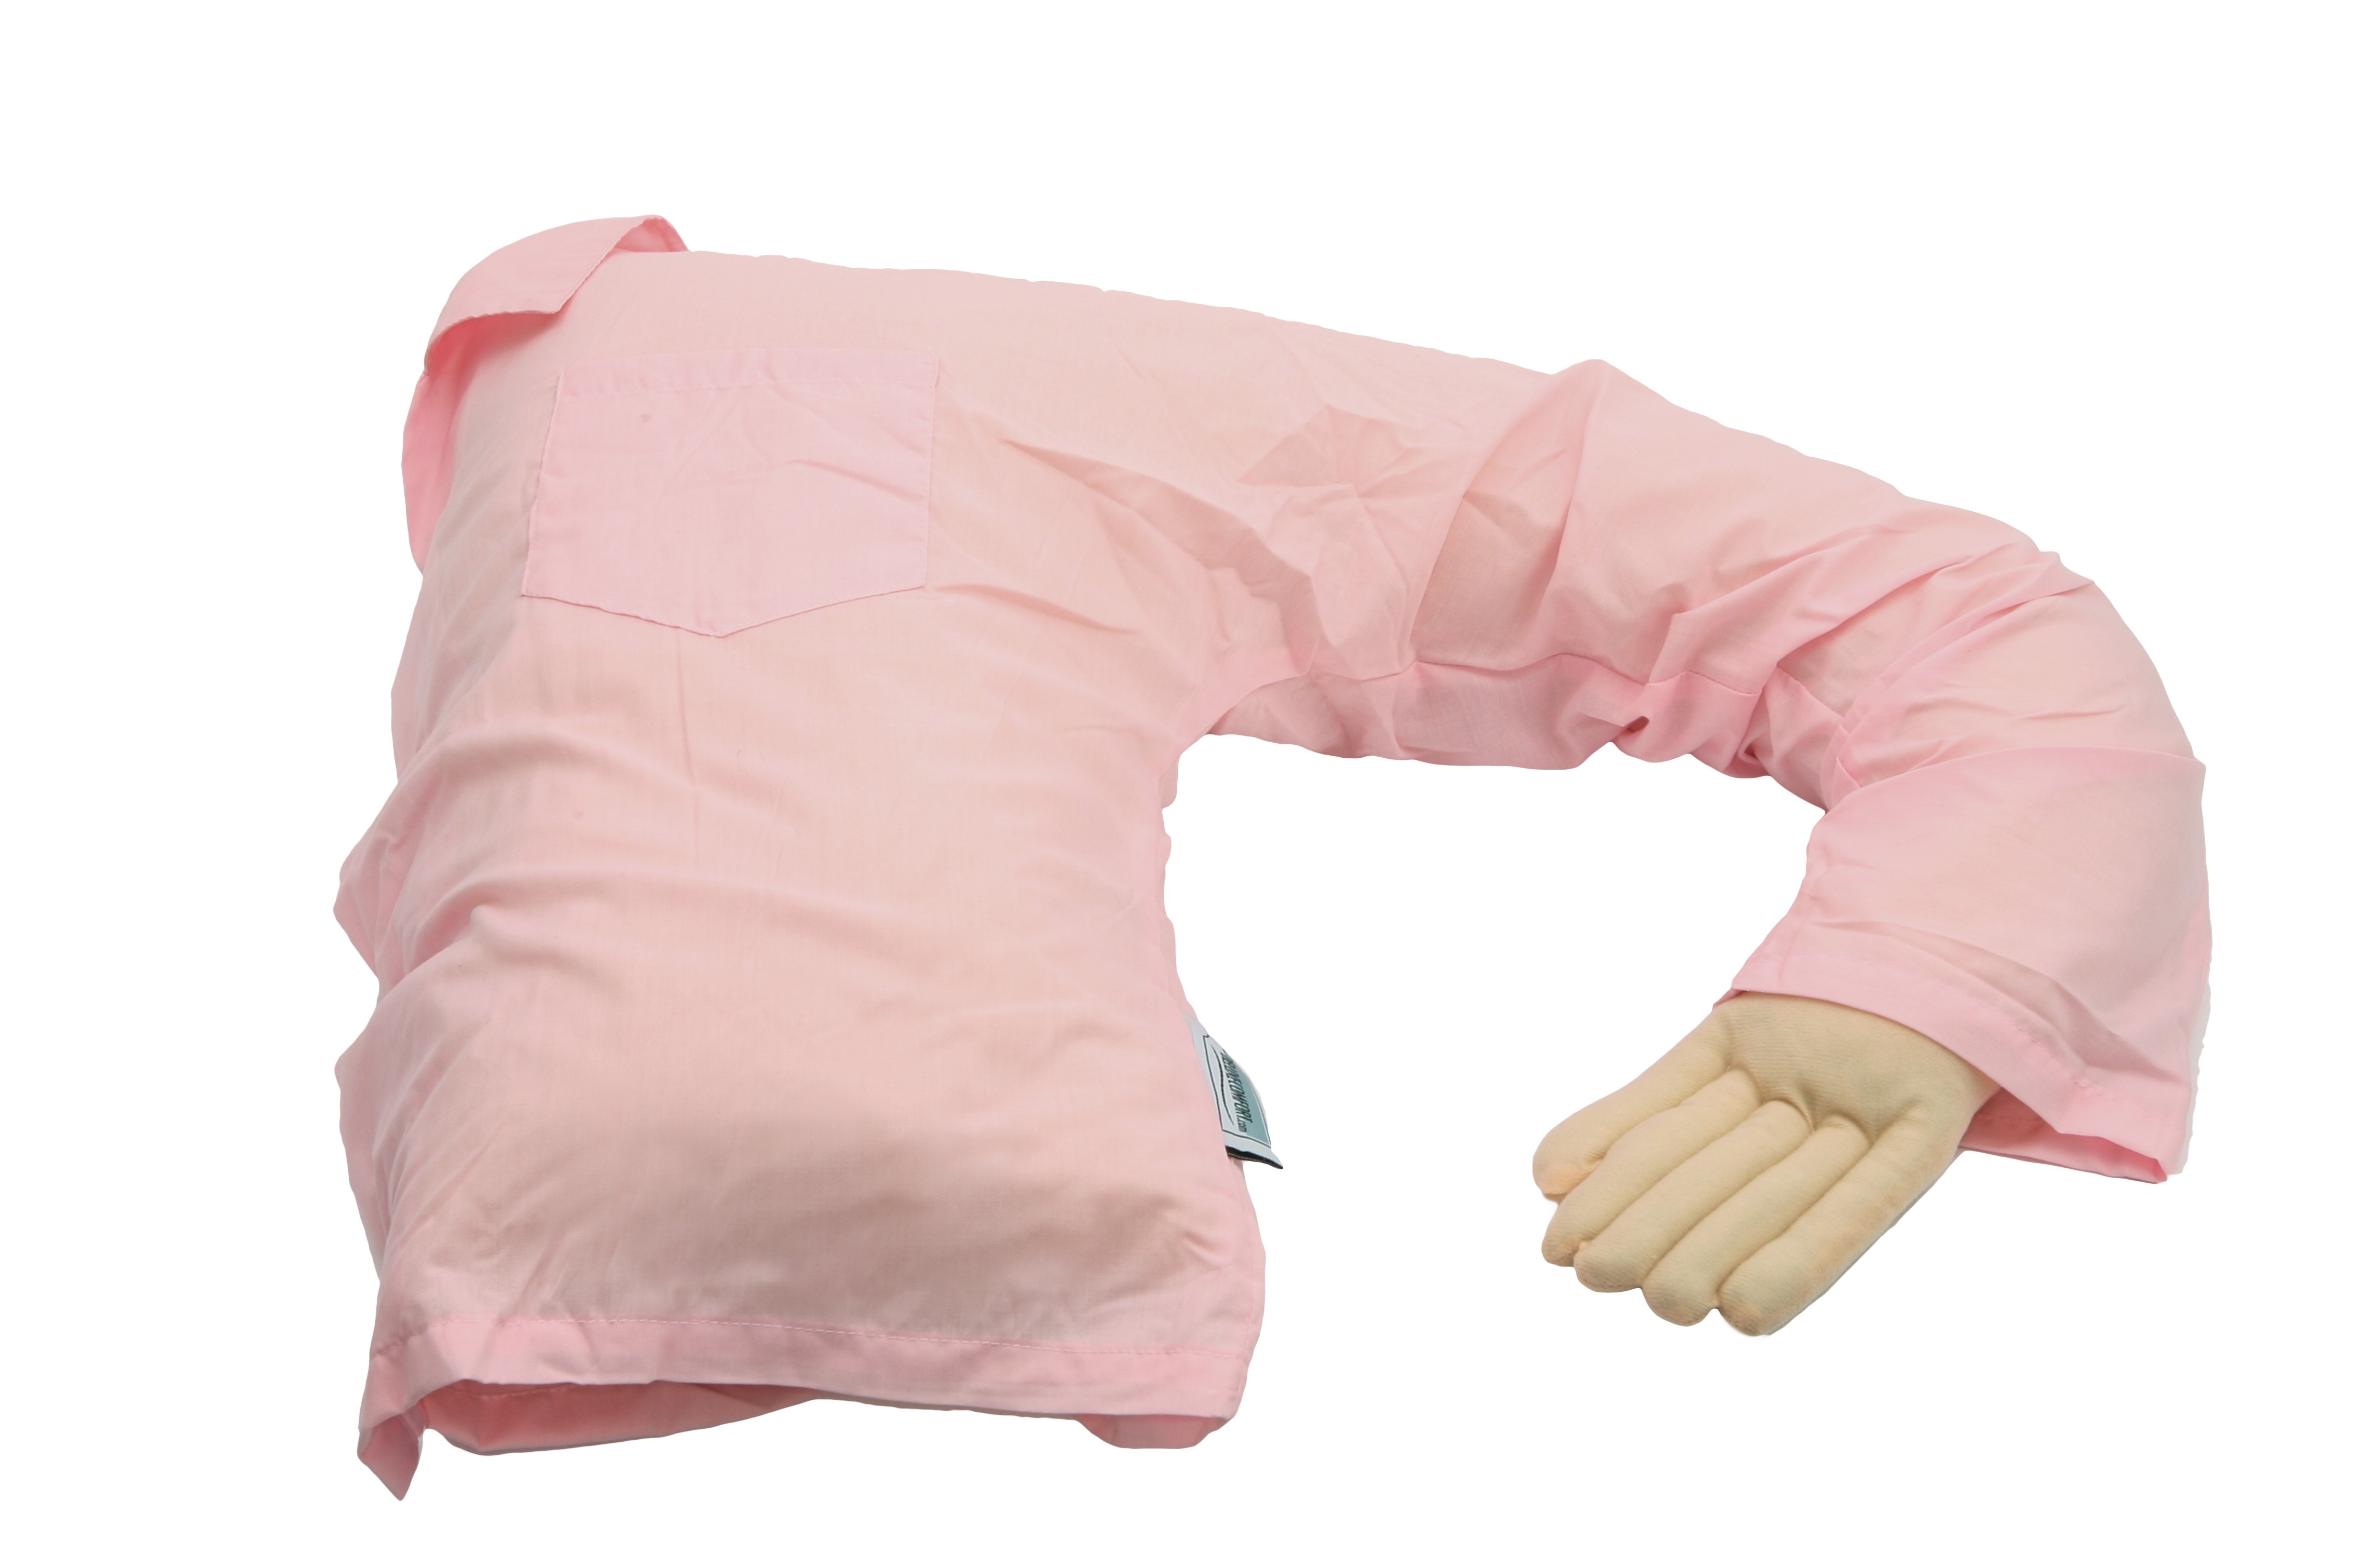 cuddle pillow arm